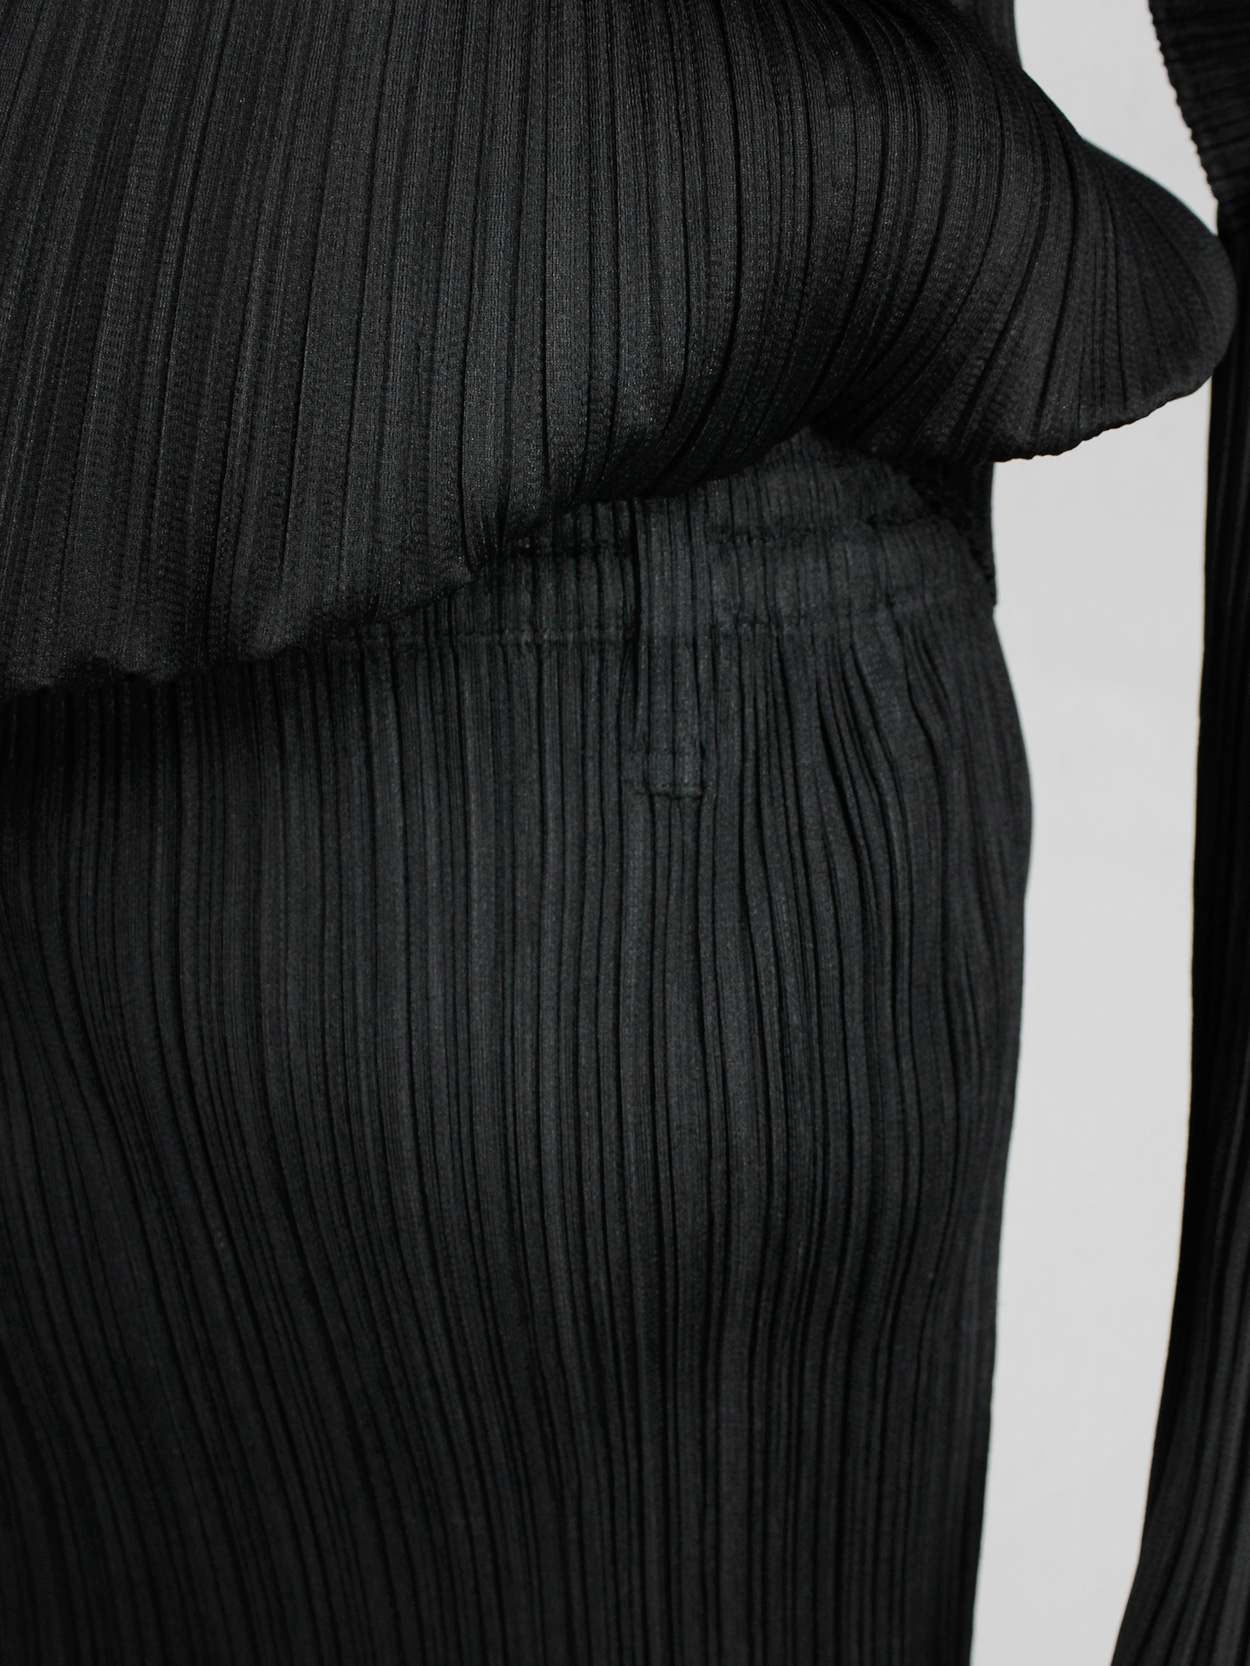 Issey Miyake Pleats Please black pleated maxi skirt - V A N II T A S